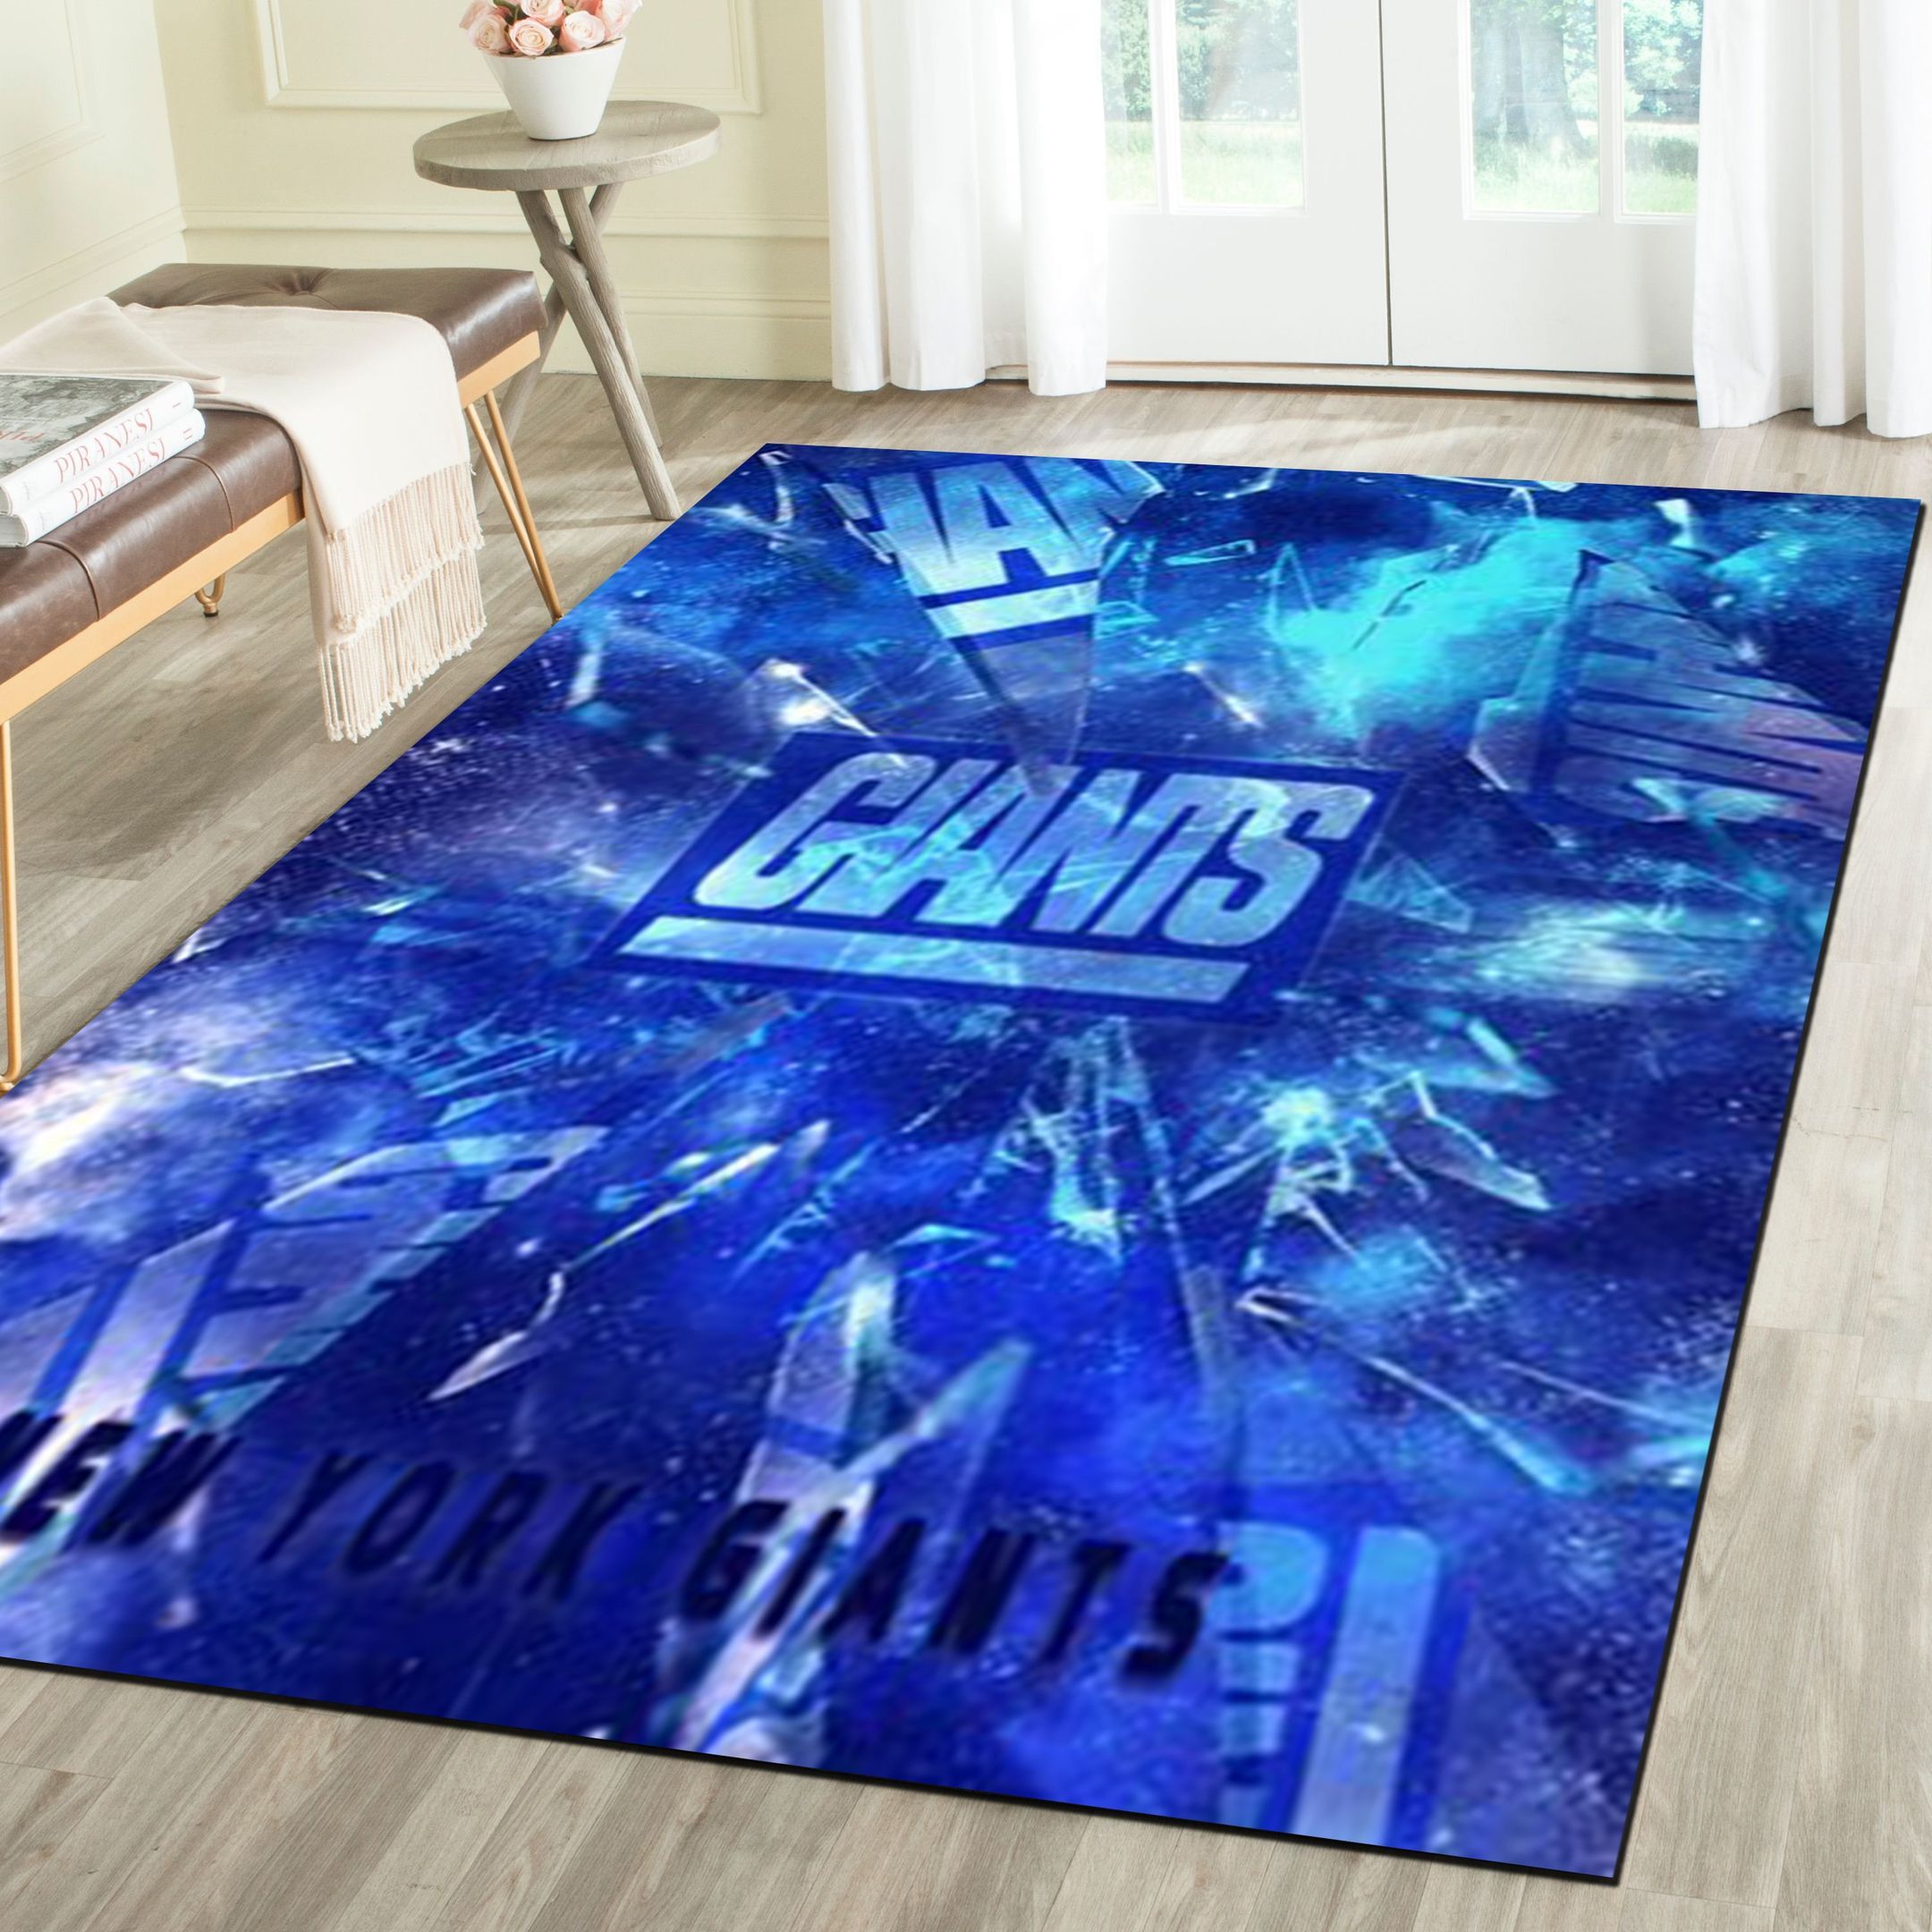 New York Giants Area Rug, Football Team Living Room Carpet, Sports Floor Mat